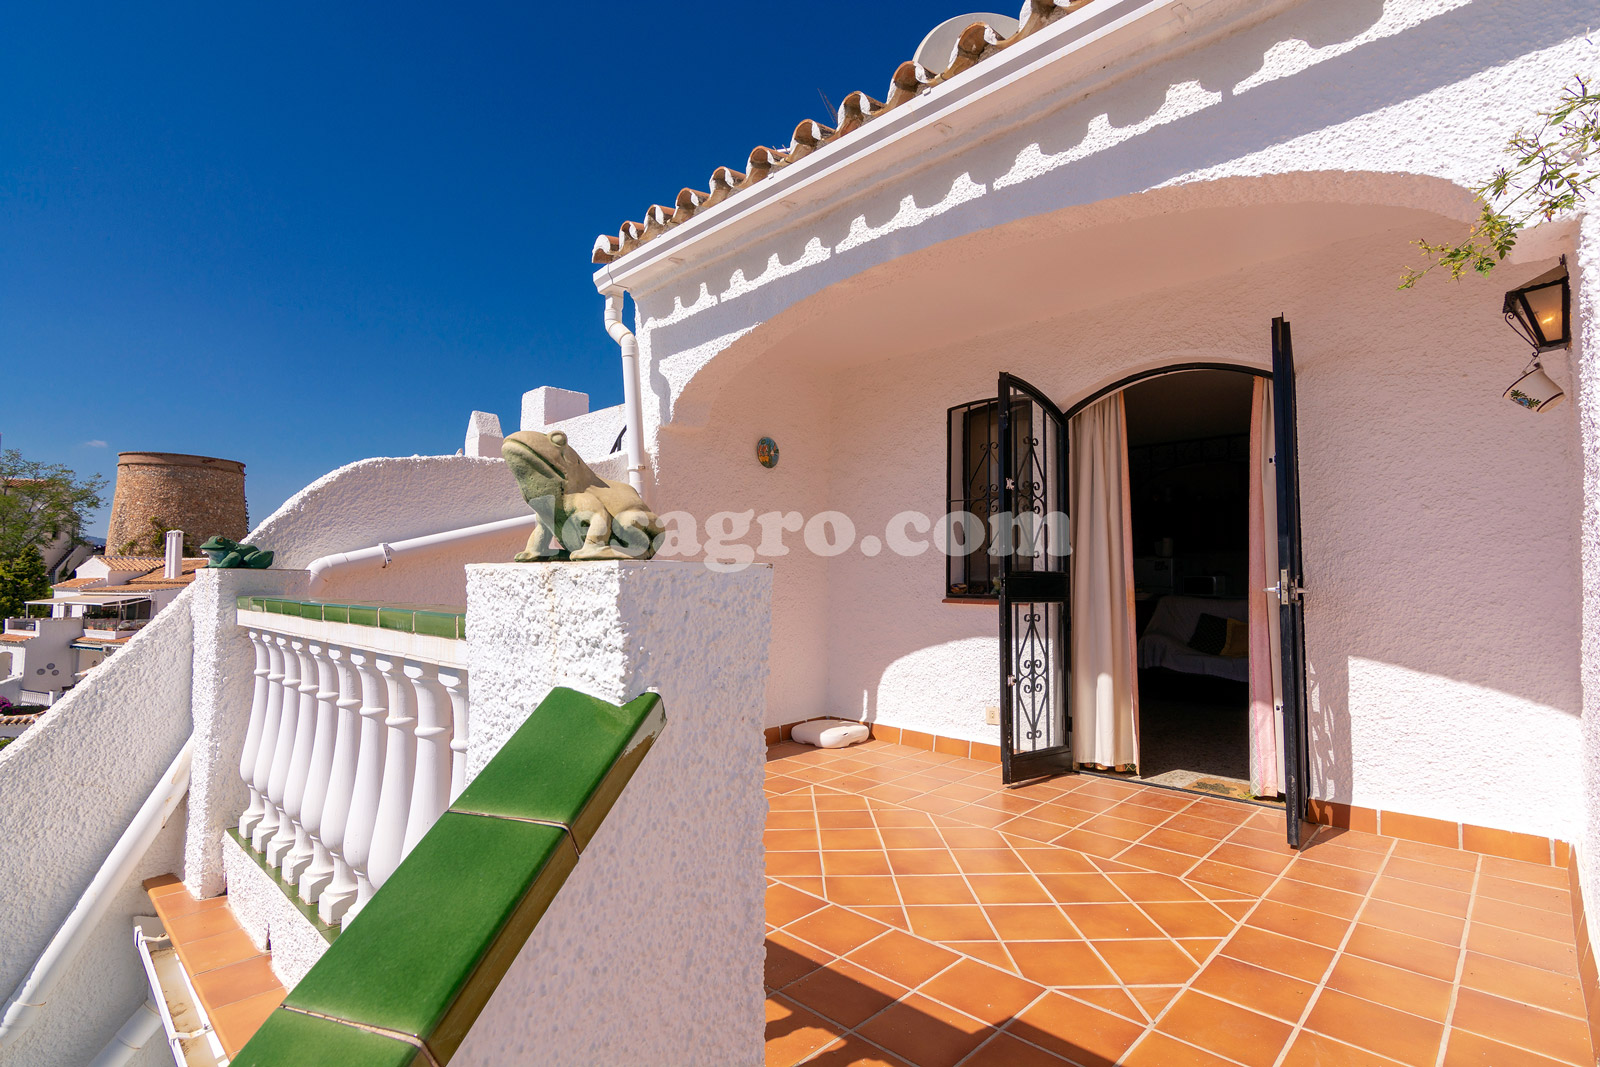 Lovely two bedroomed villa for sale in San Juan de Capistrano.